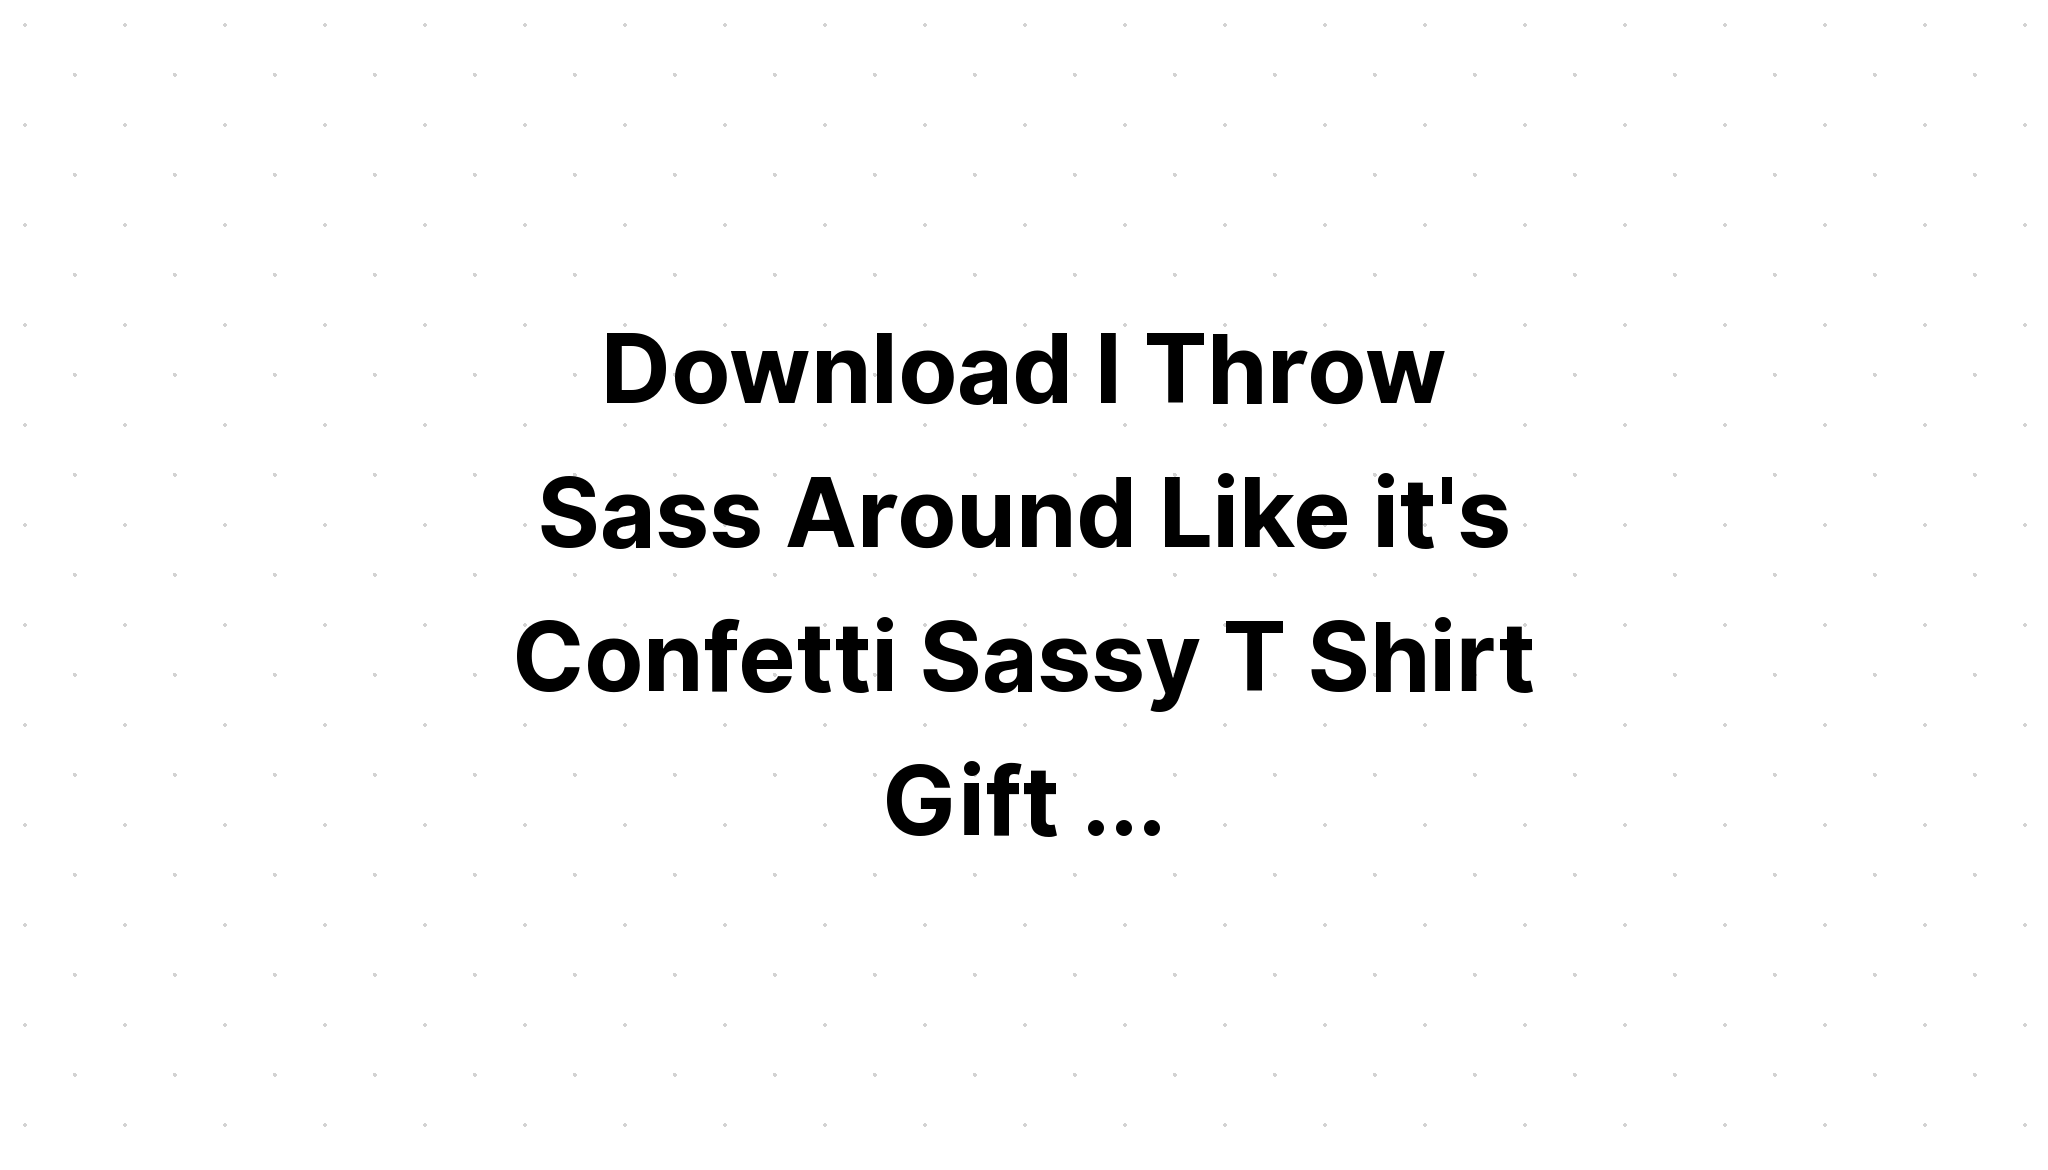 Download Throw Sass Around Like Confetti SVG File